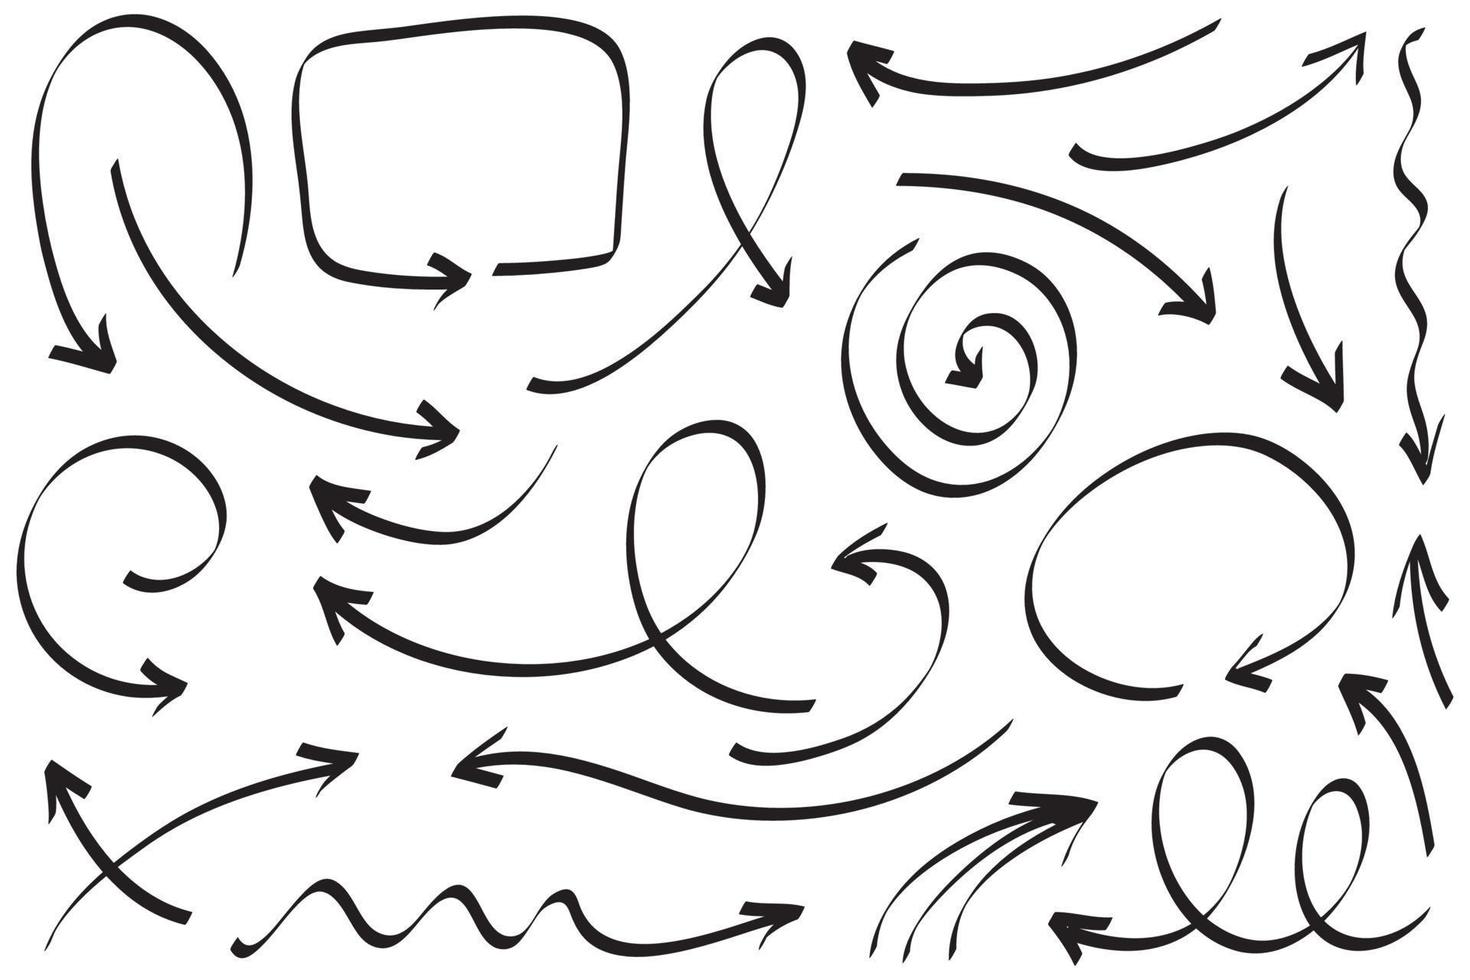 uppsättning handritade pilar .vector doodle designelement. illustration på vit background.for business infographic, banner, webb och konceptdesign. vektor